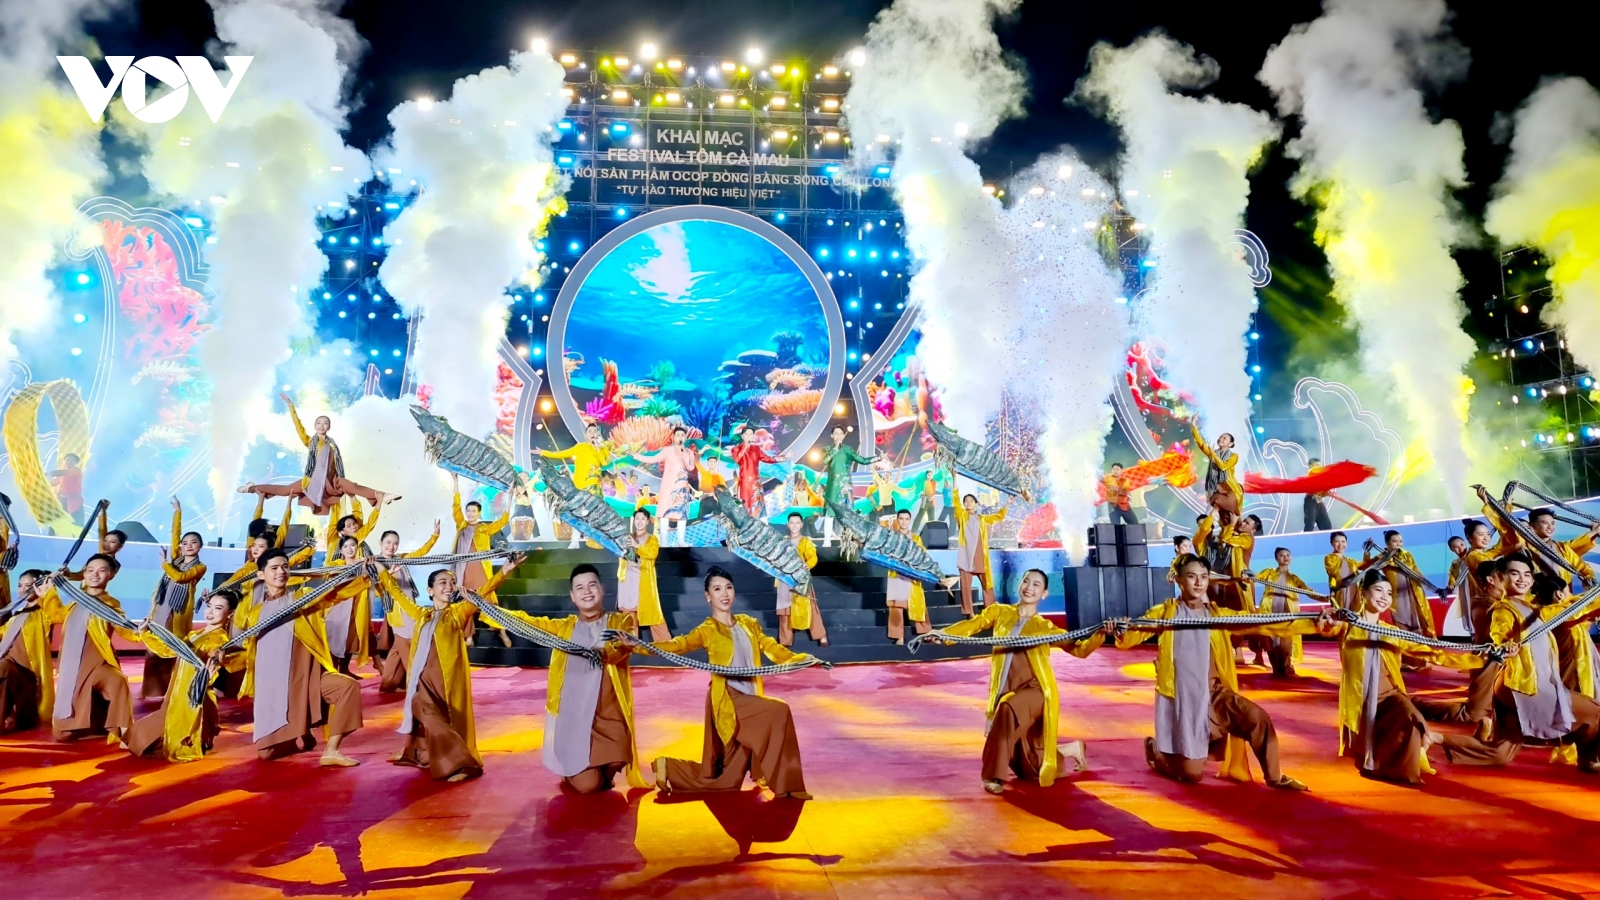 Khai mạc Festival Tôm Cà Mau